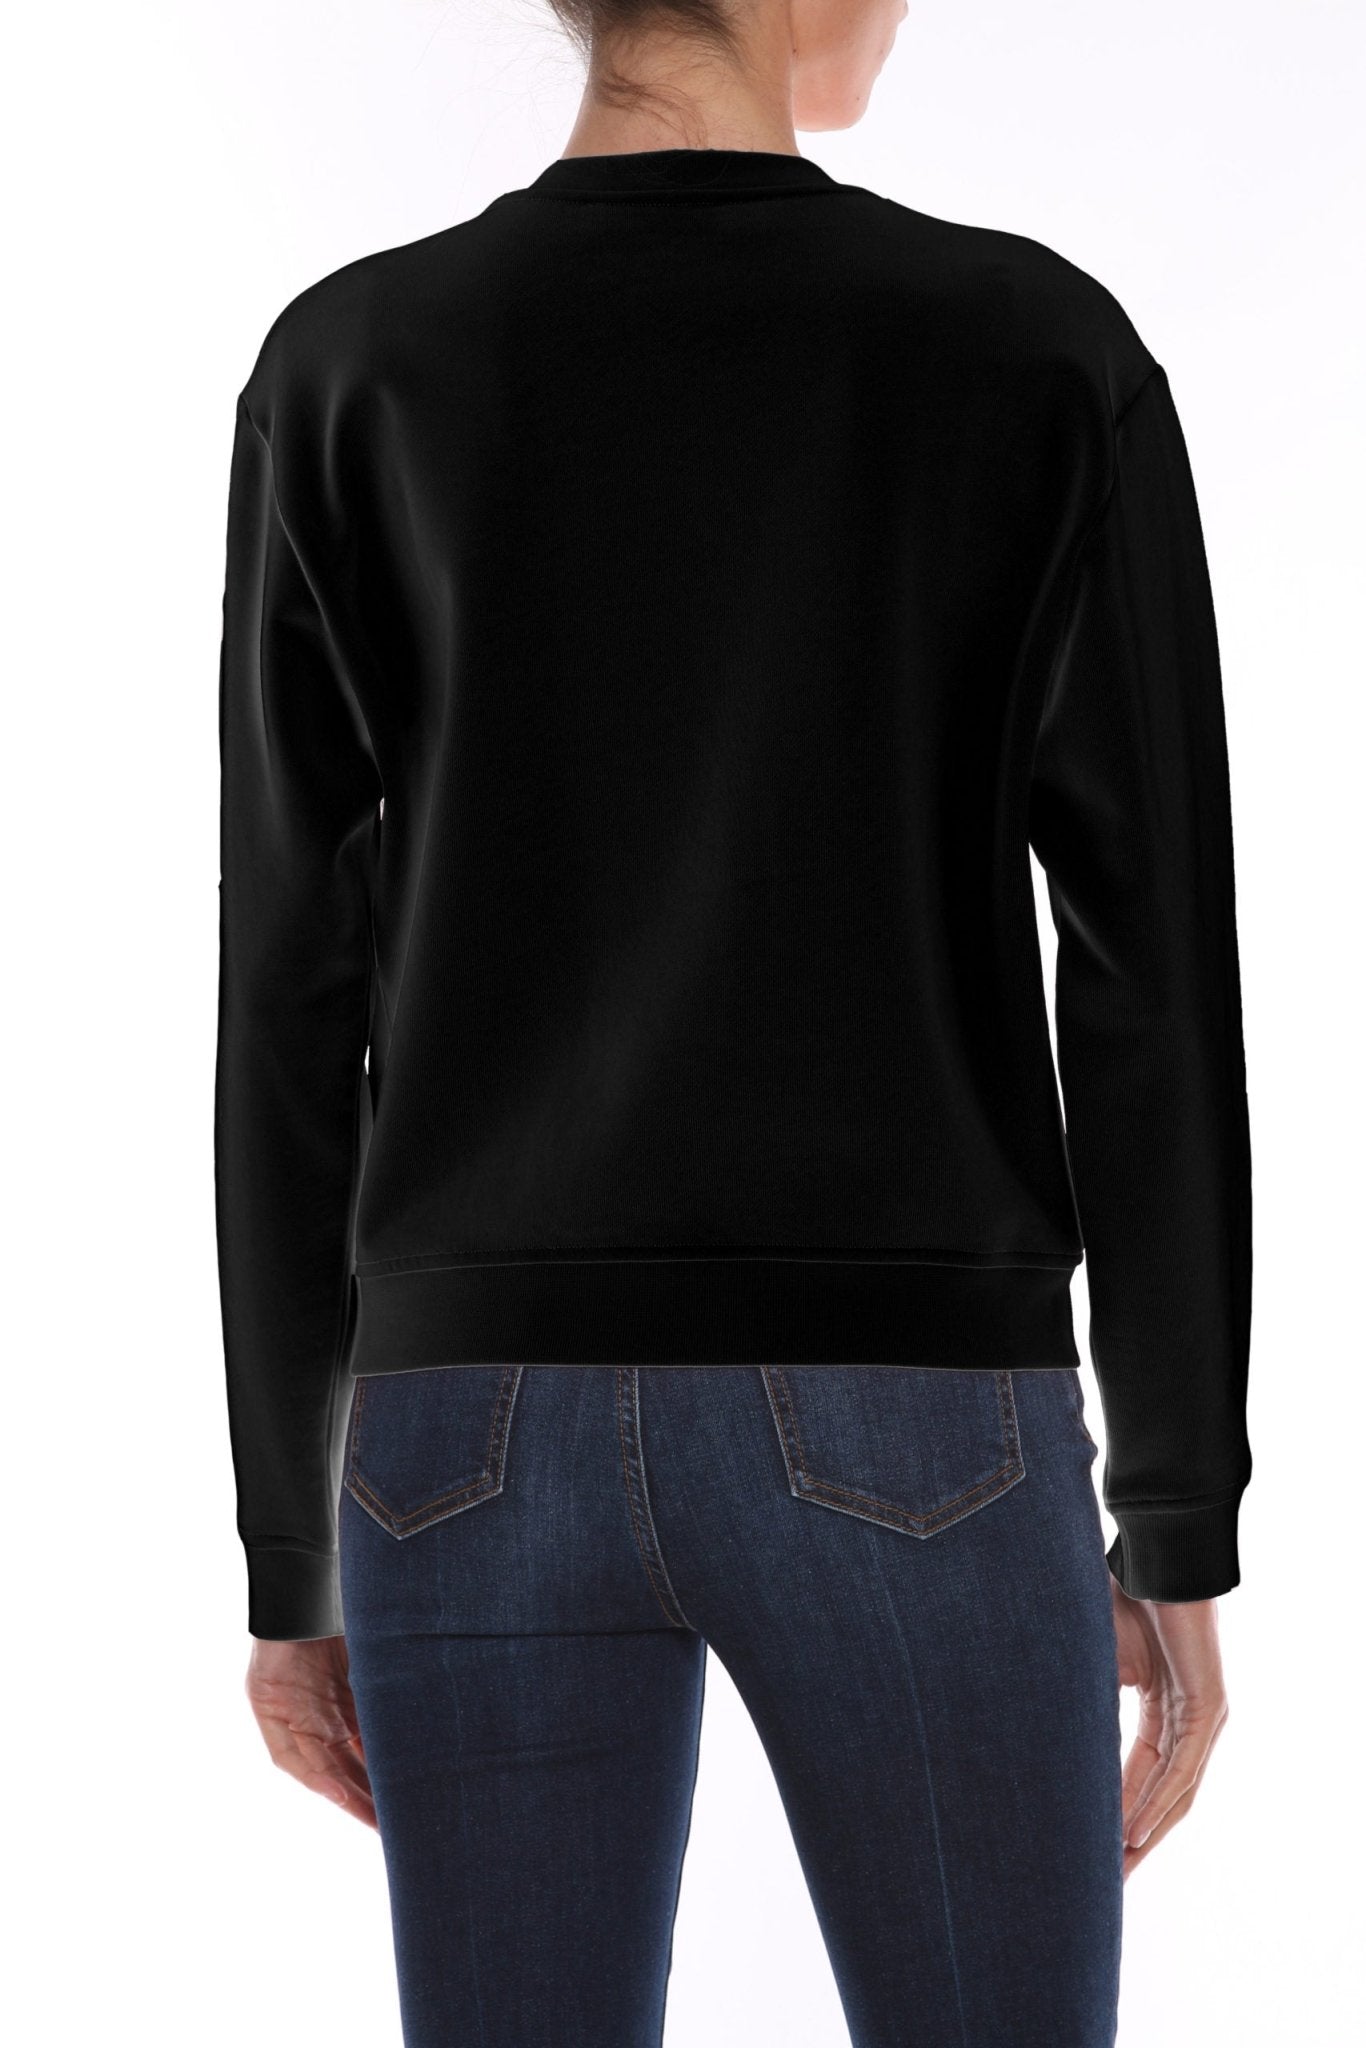 Love Moschino Black Cotton Sweater - Fizigo